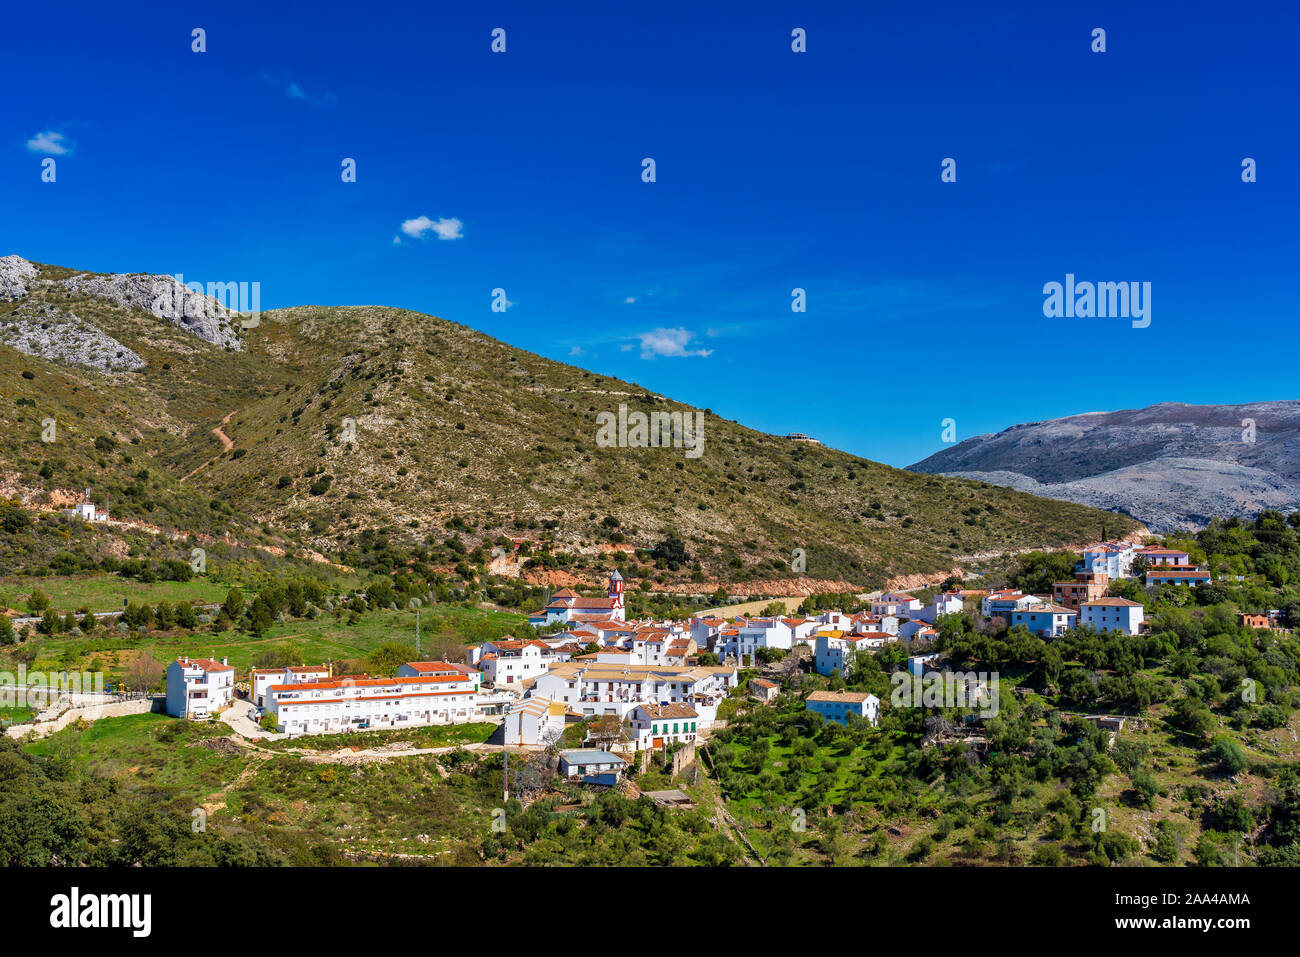 The smallest town in the Ronda region, Atajate, Andalusia, Spain, Iberian Peninsula Stock Photo